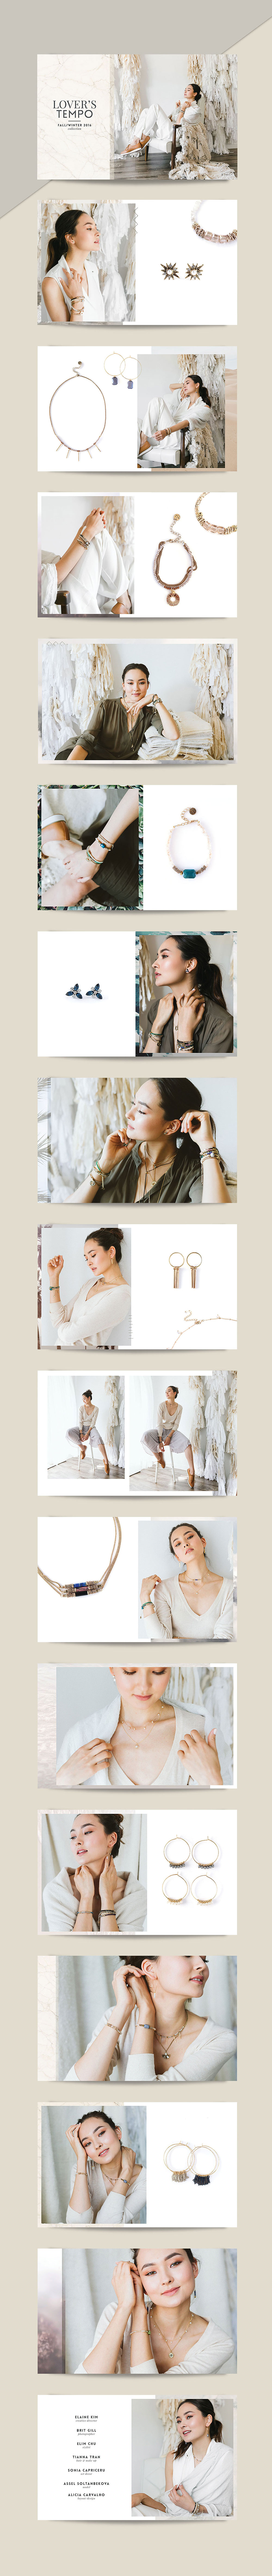 FW 16 Lover's Tempo Vancouver jewellery Lookbook layout design